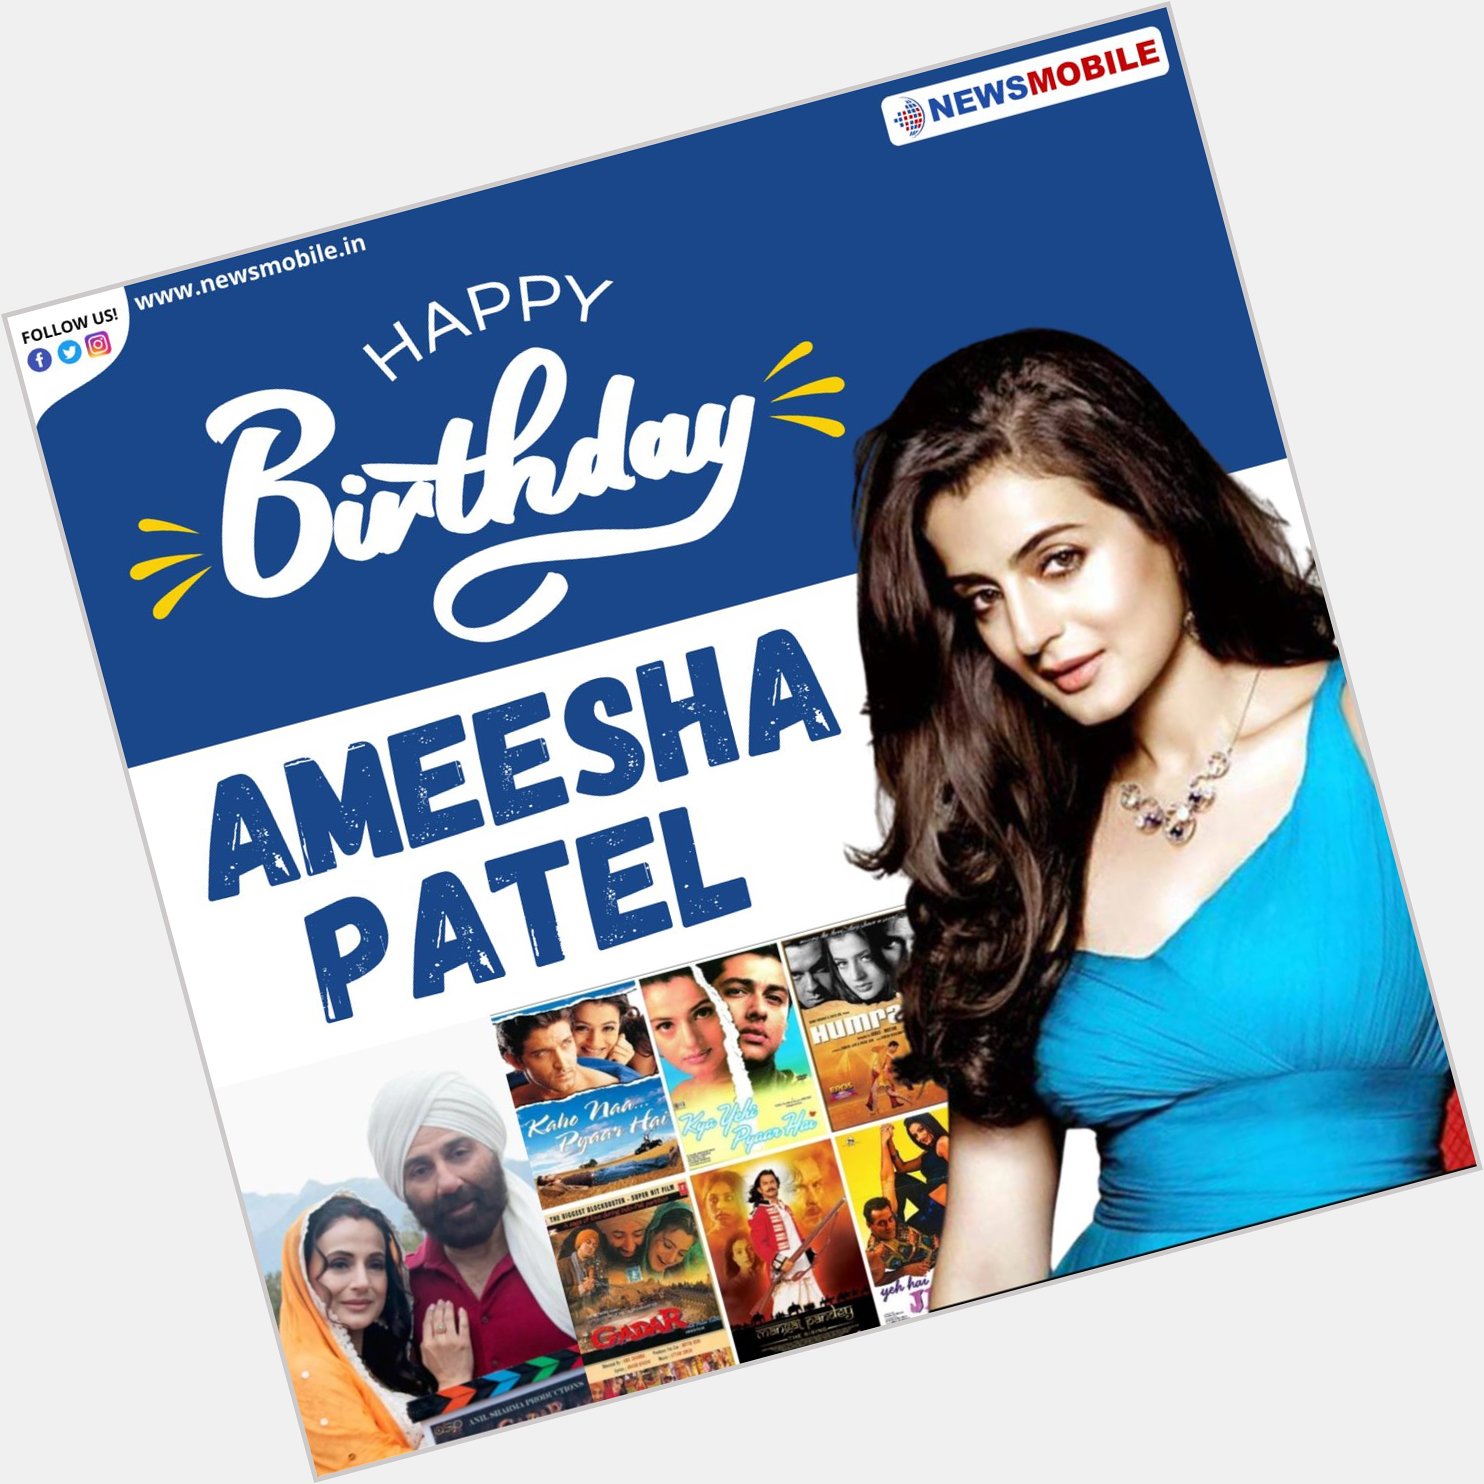 Wishing Ameesha Patel a very happy birthday!  